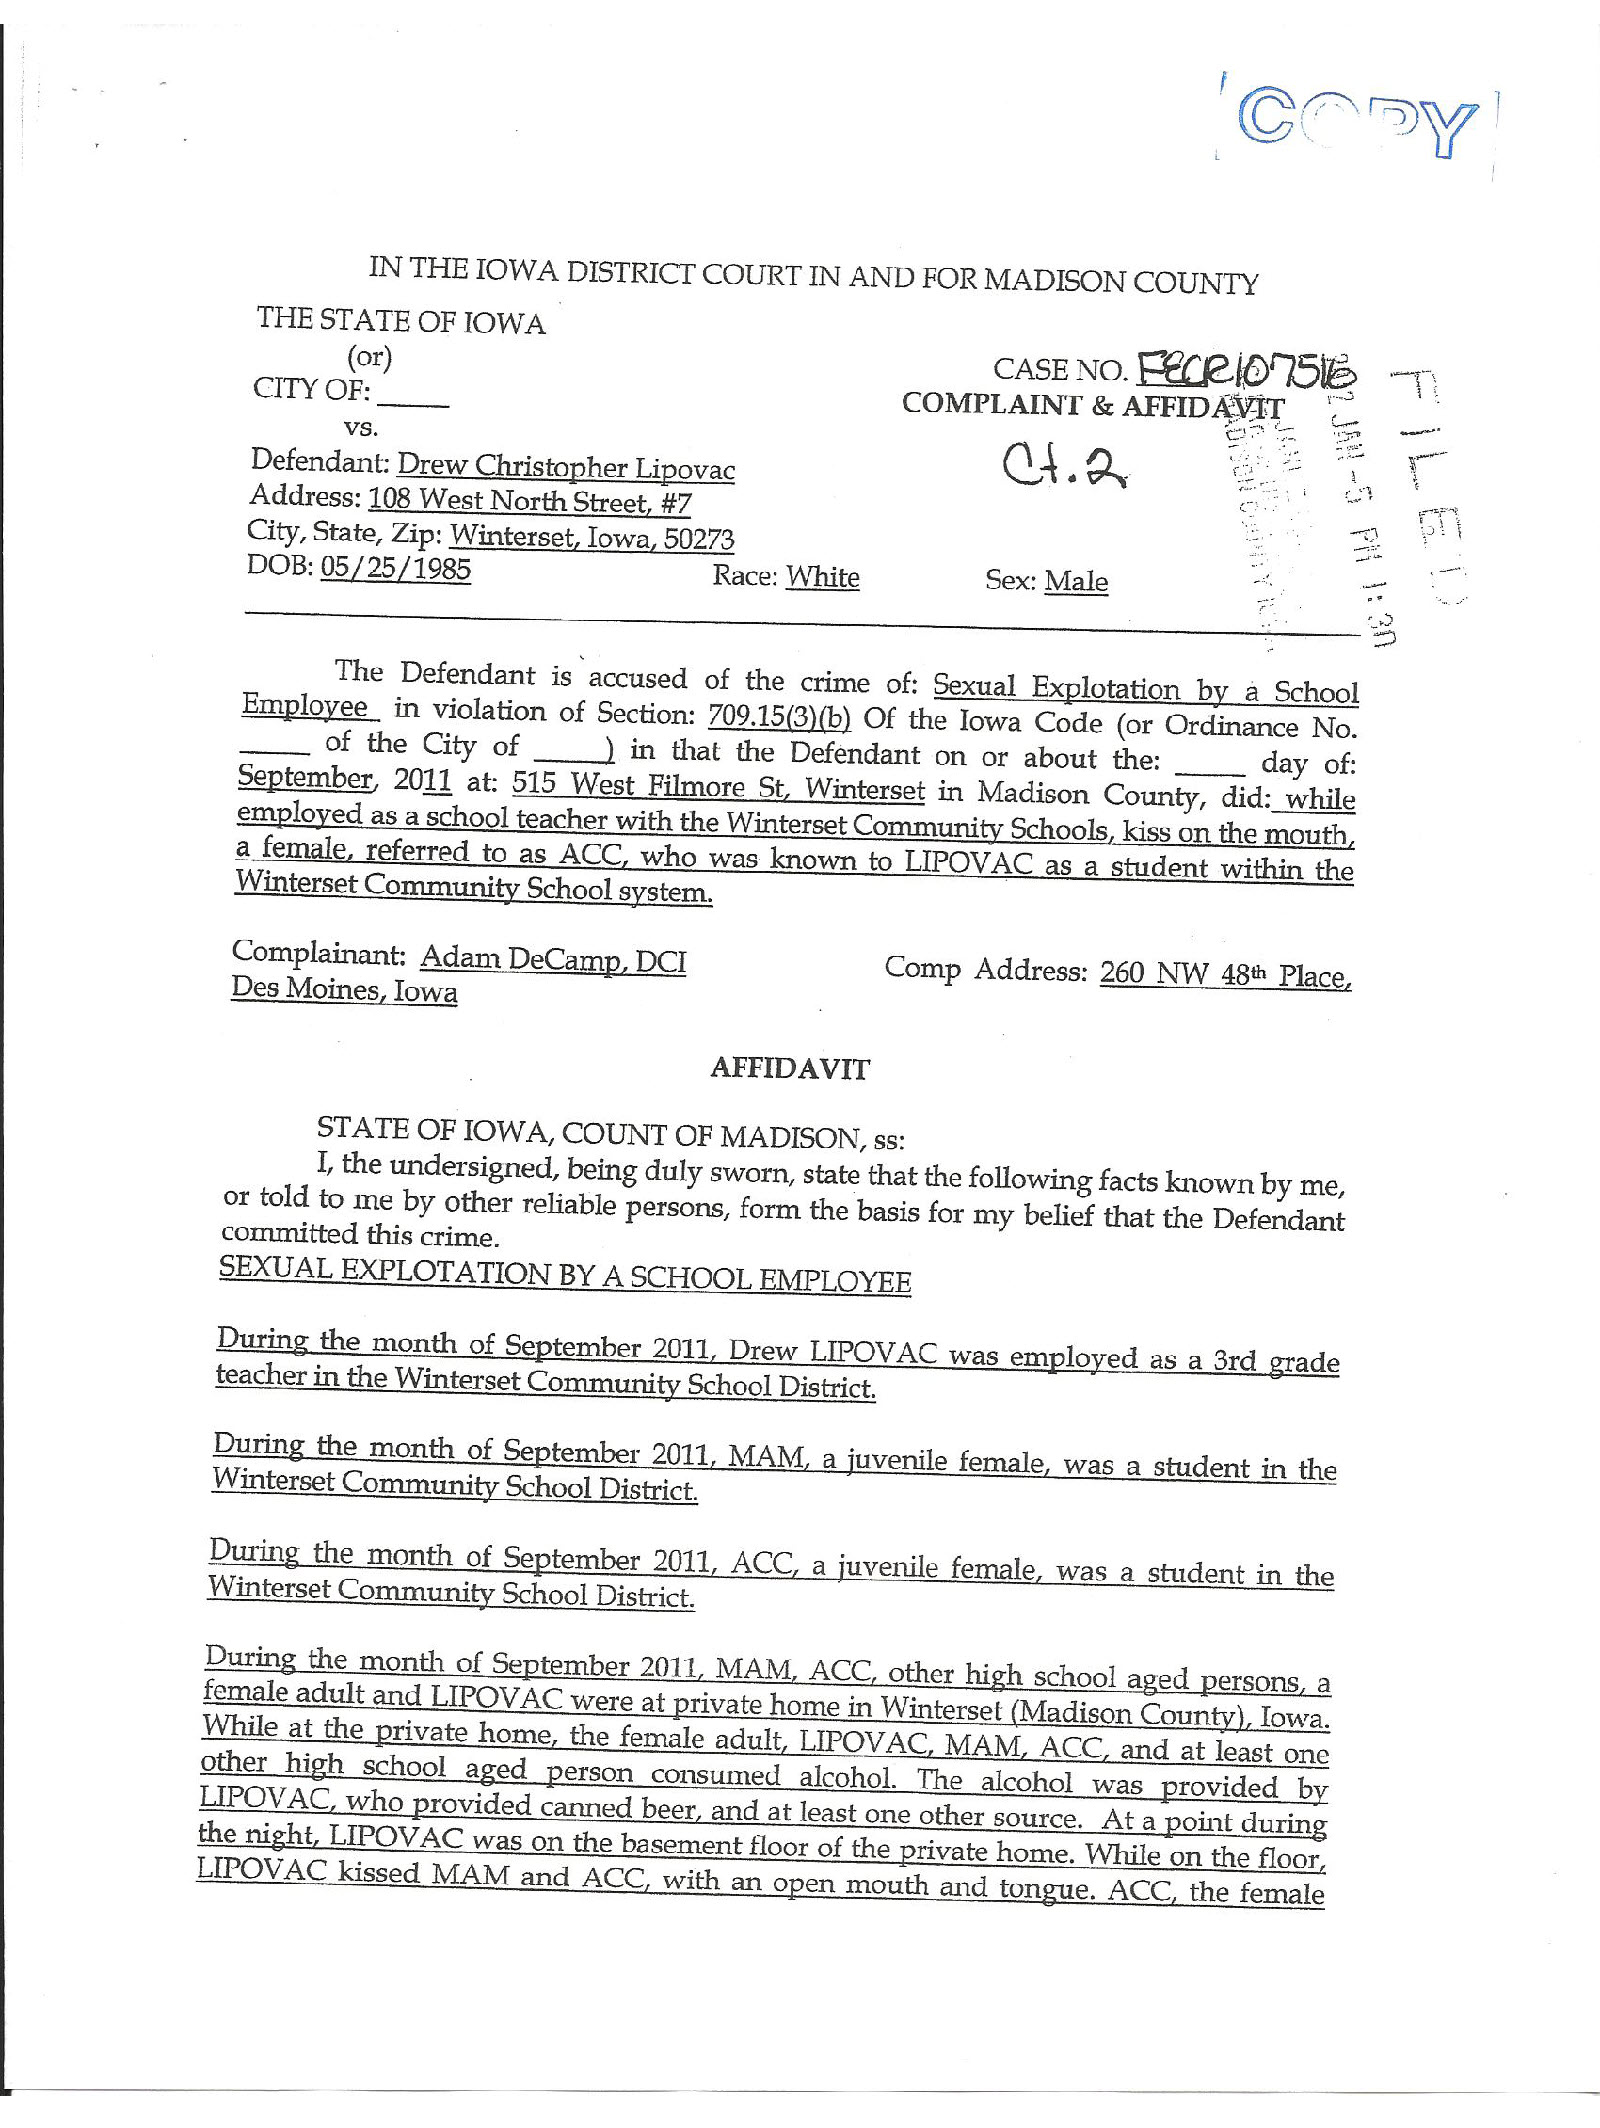 Copy of lipovac drew christopher arrest warrant4.jpg